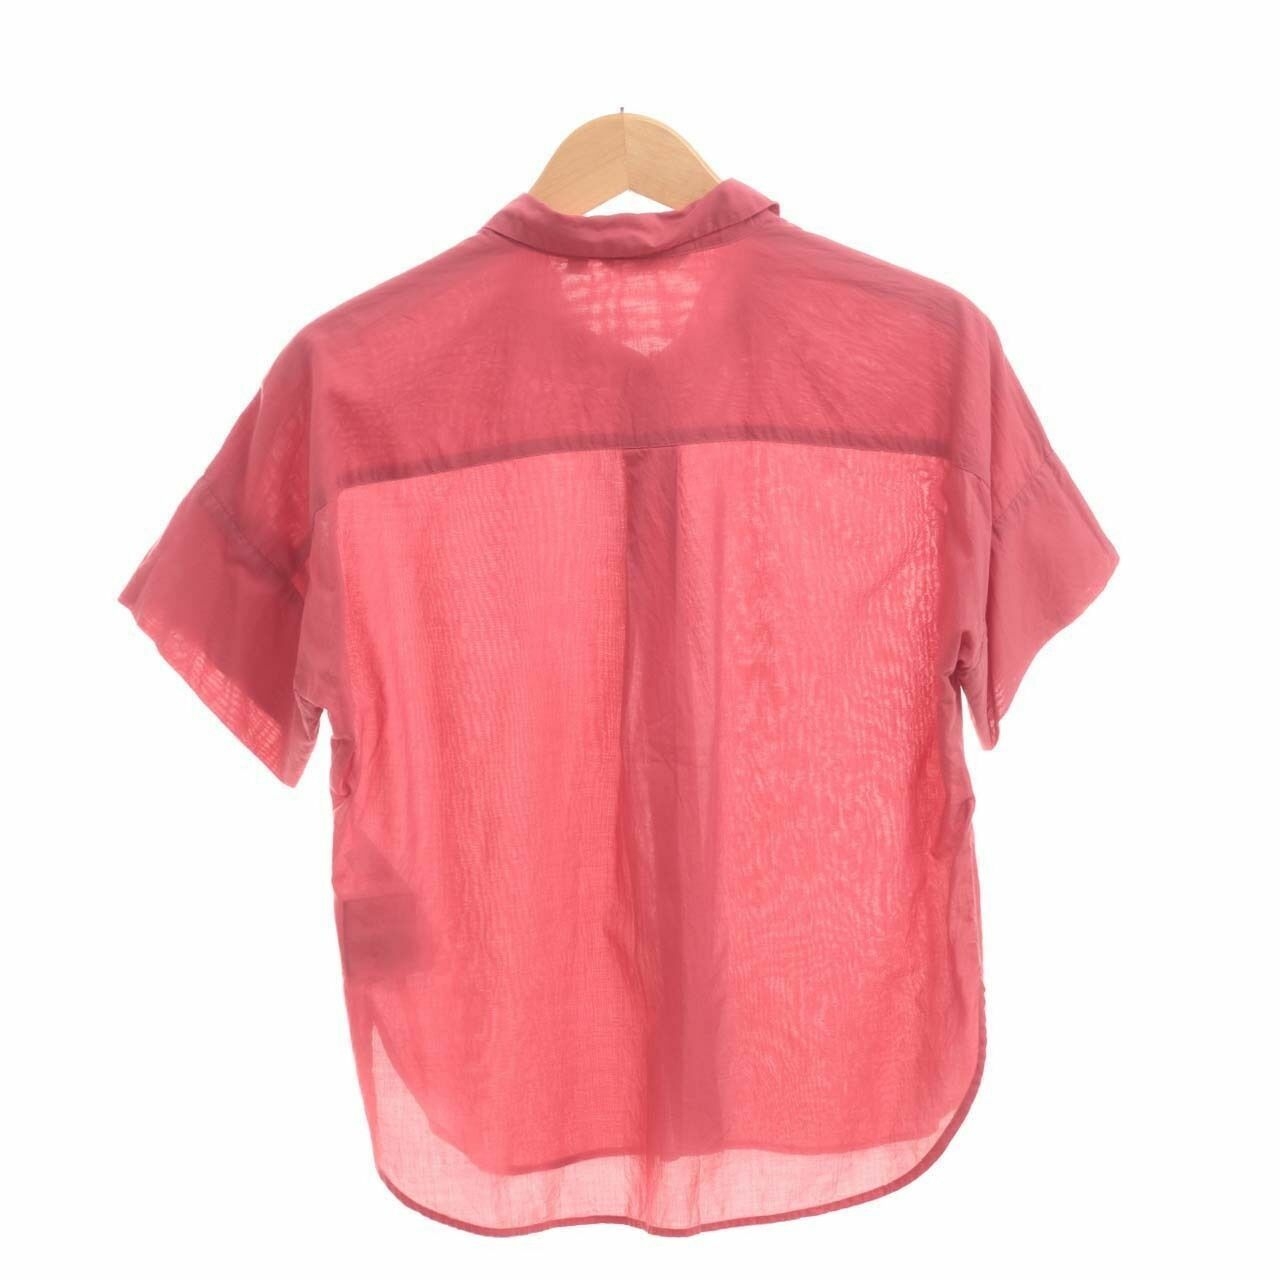 UNIQLO Pink Shirt